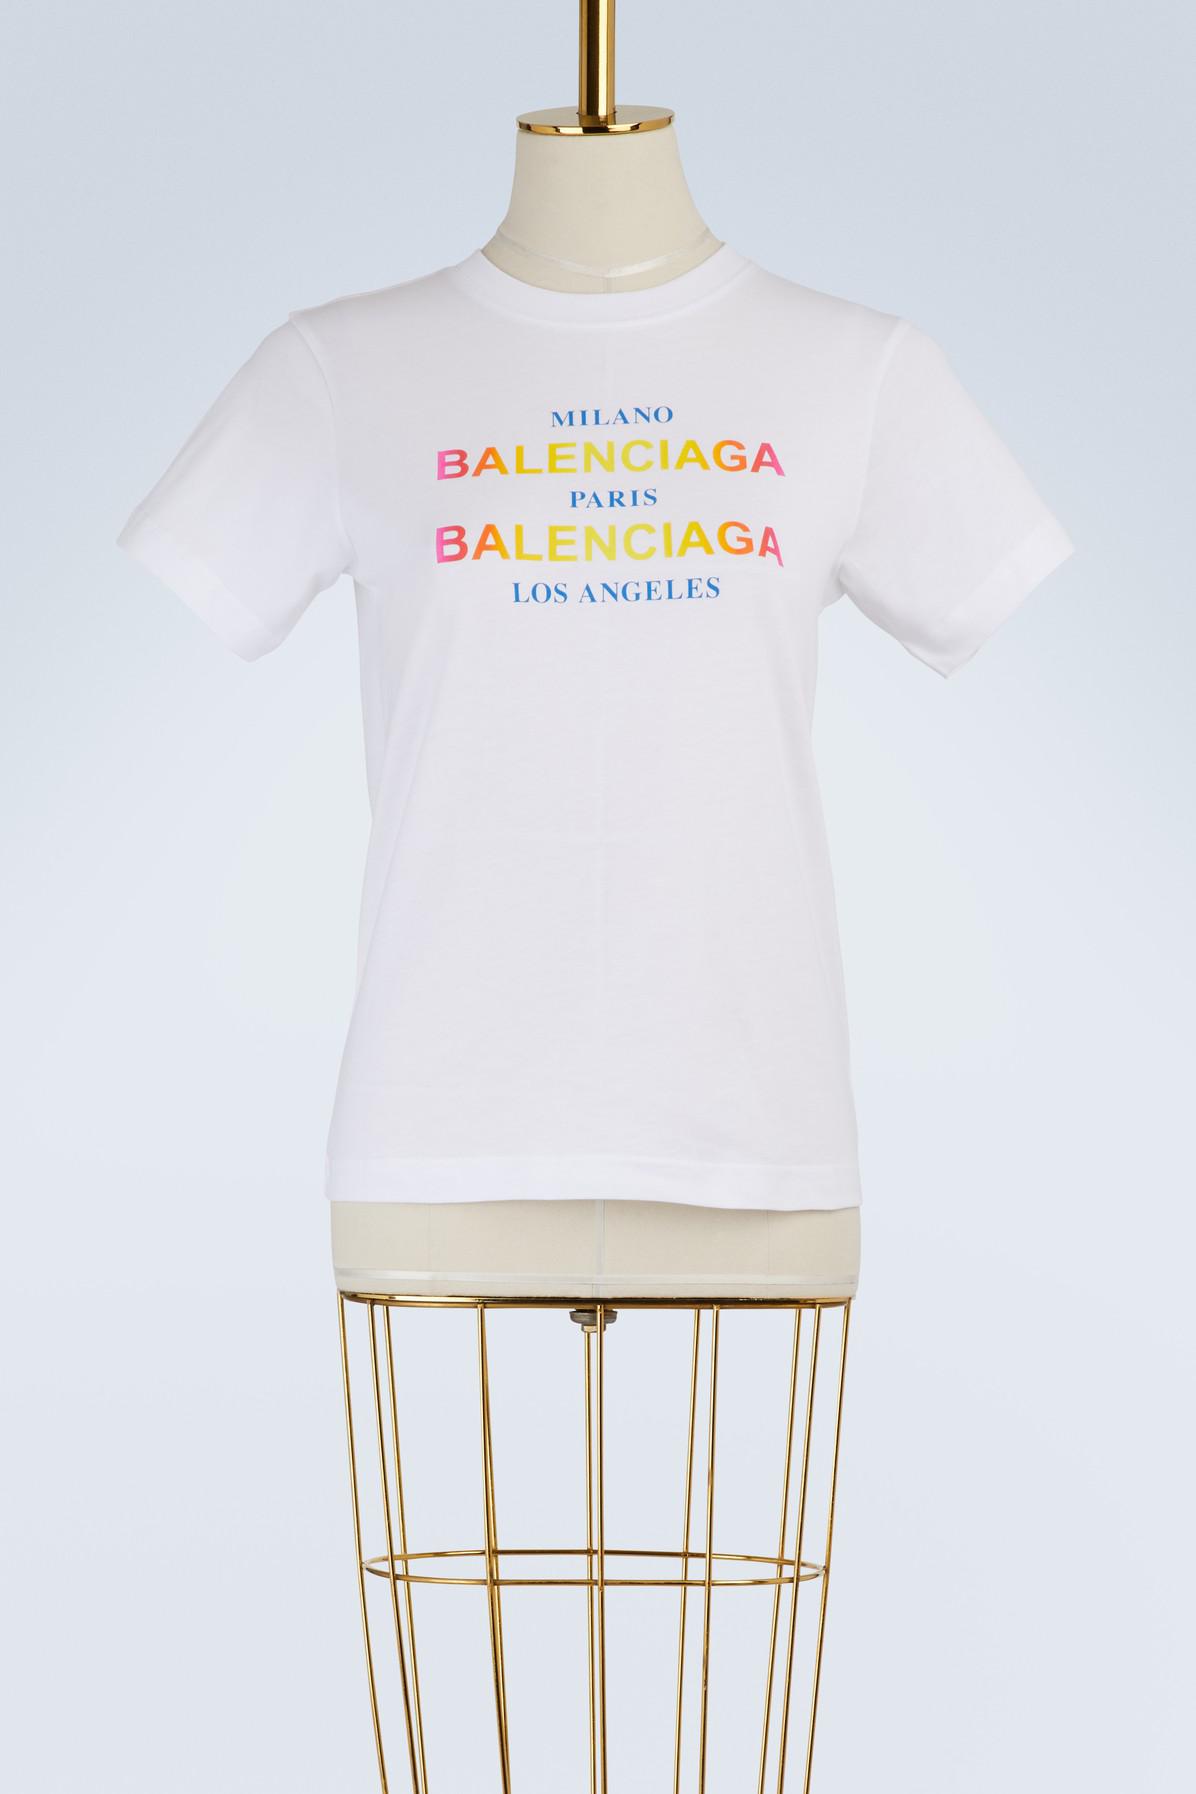 Balenciaga Paris Milano La T-shirt in 